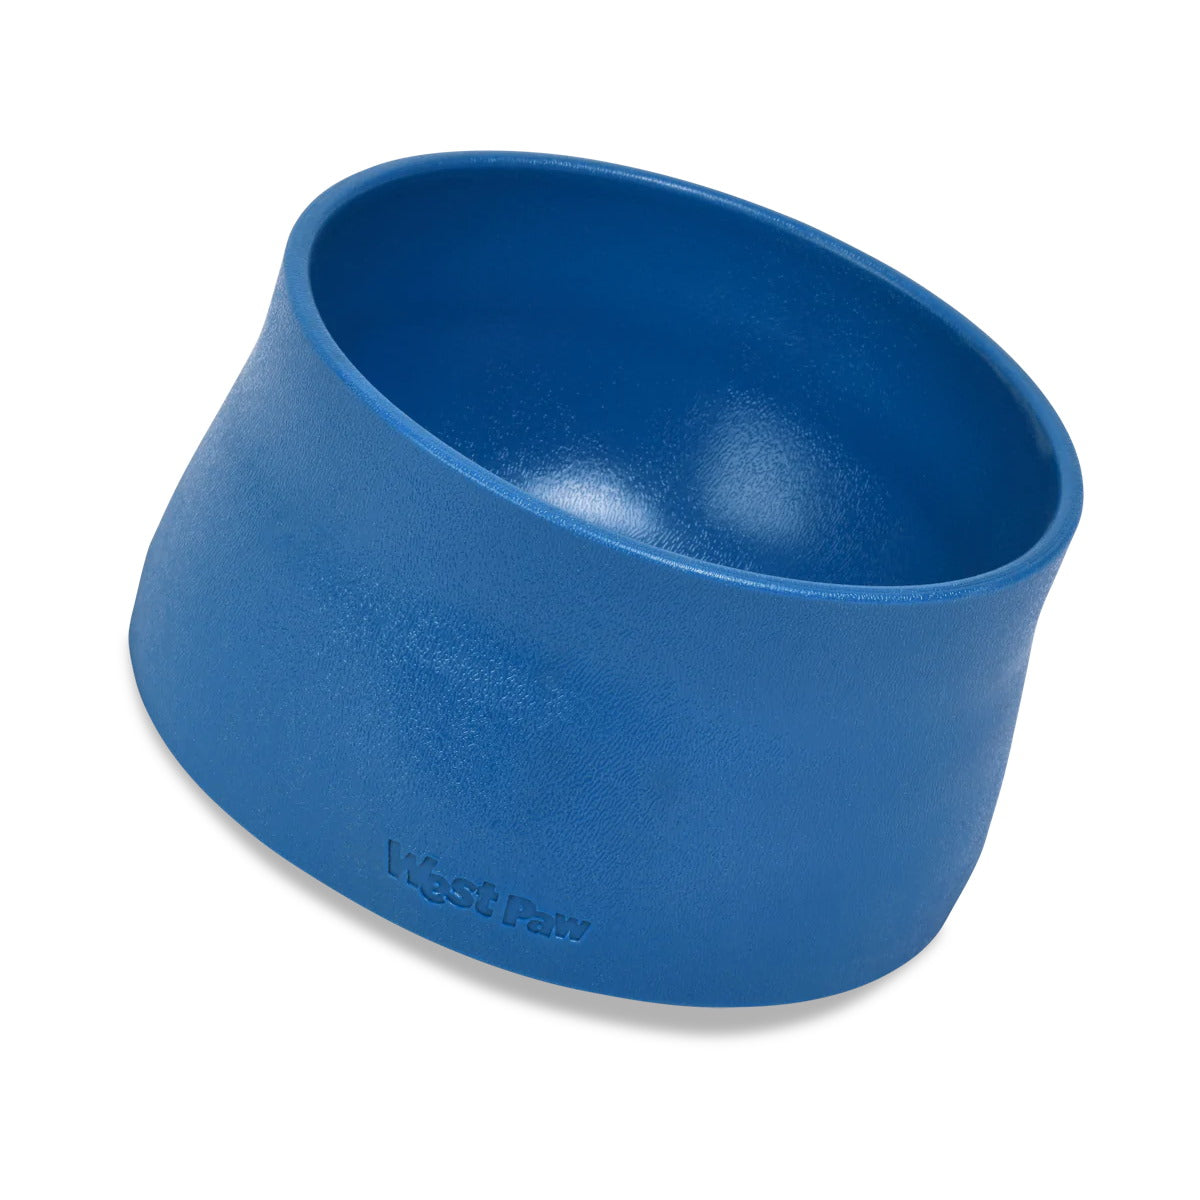 West Paw Seaflex Eco-Friendly Dog Bowl - Marine Blue